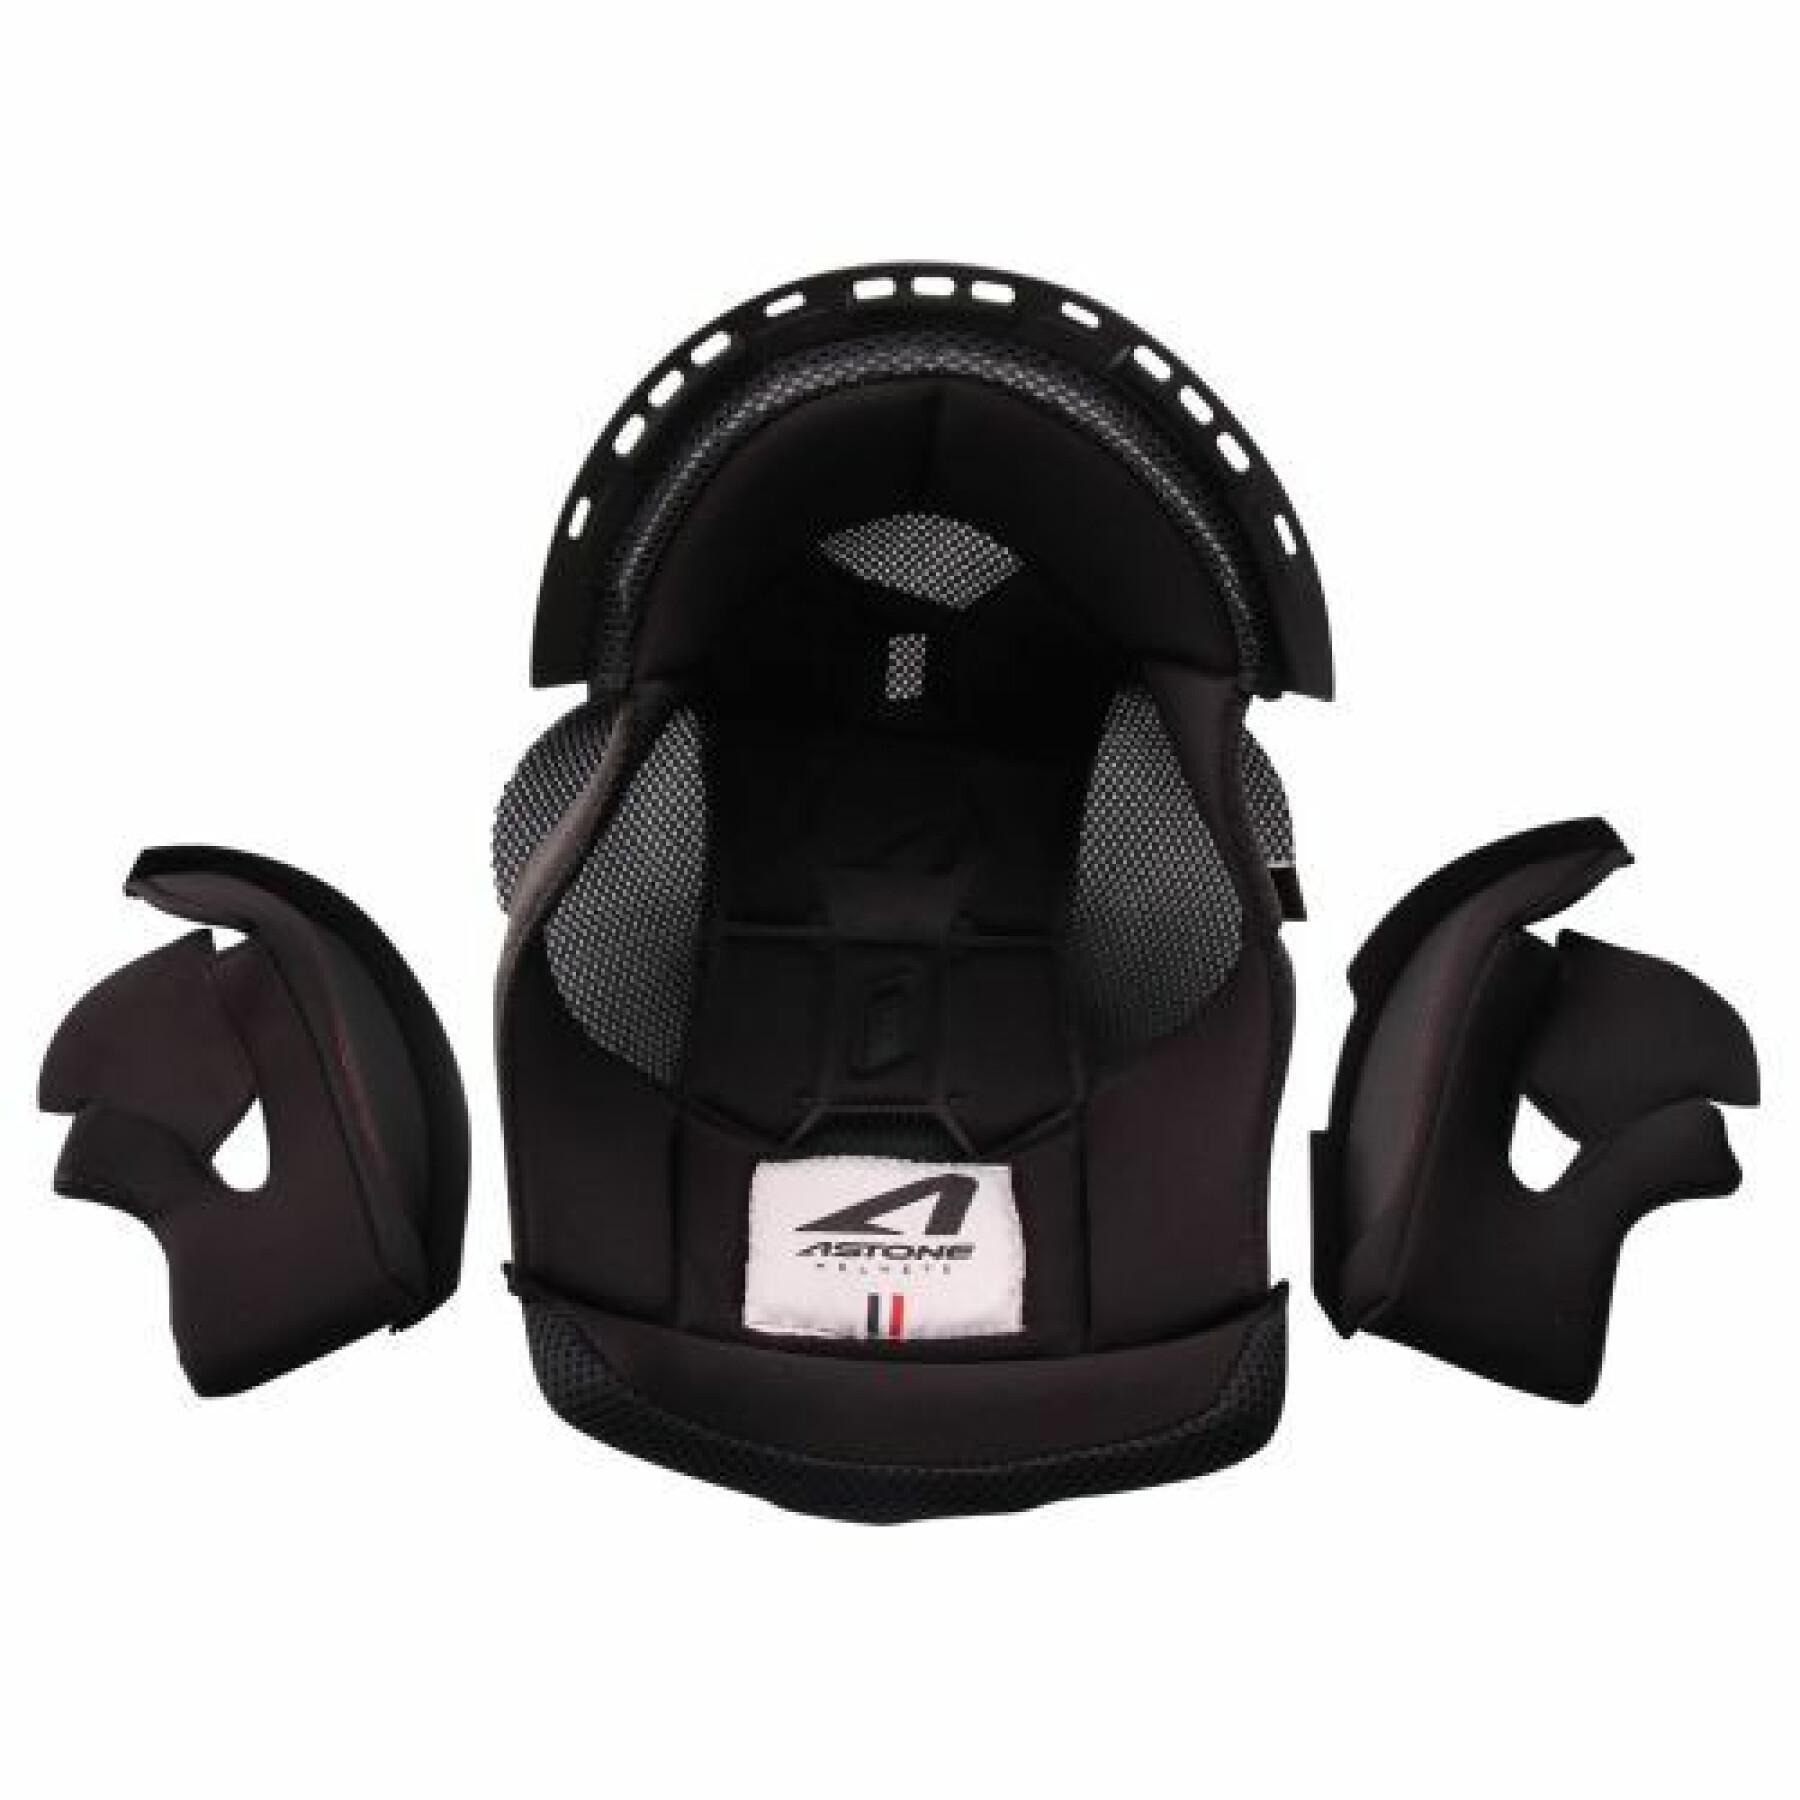 Foam motorcycle helmet interior Astone Gt2